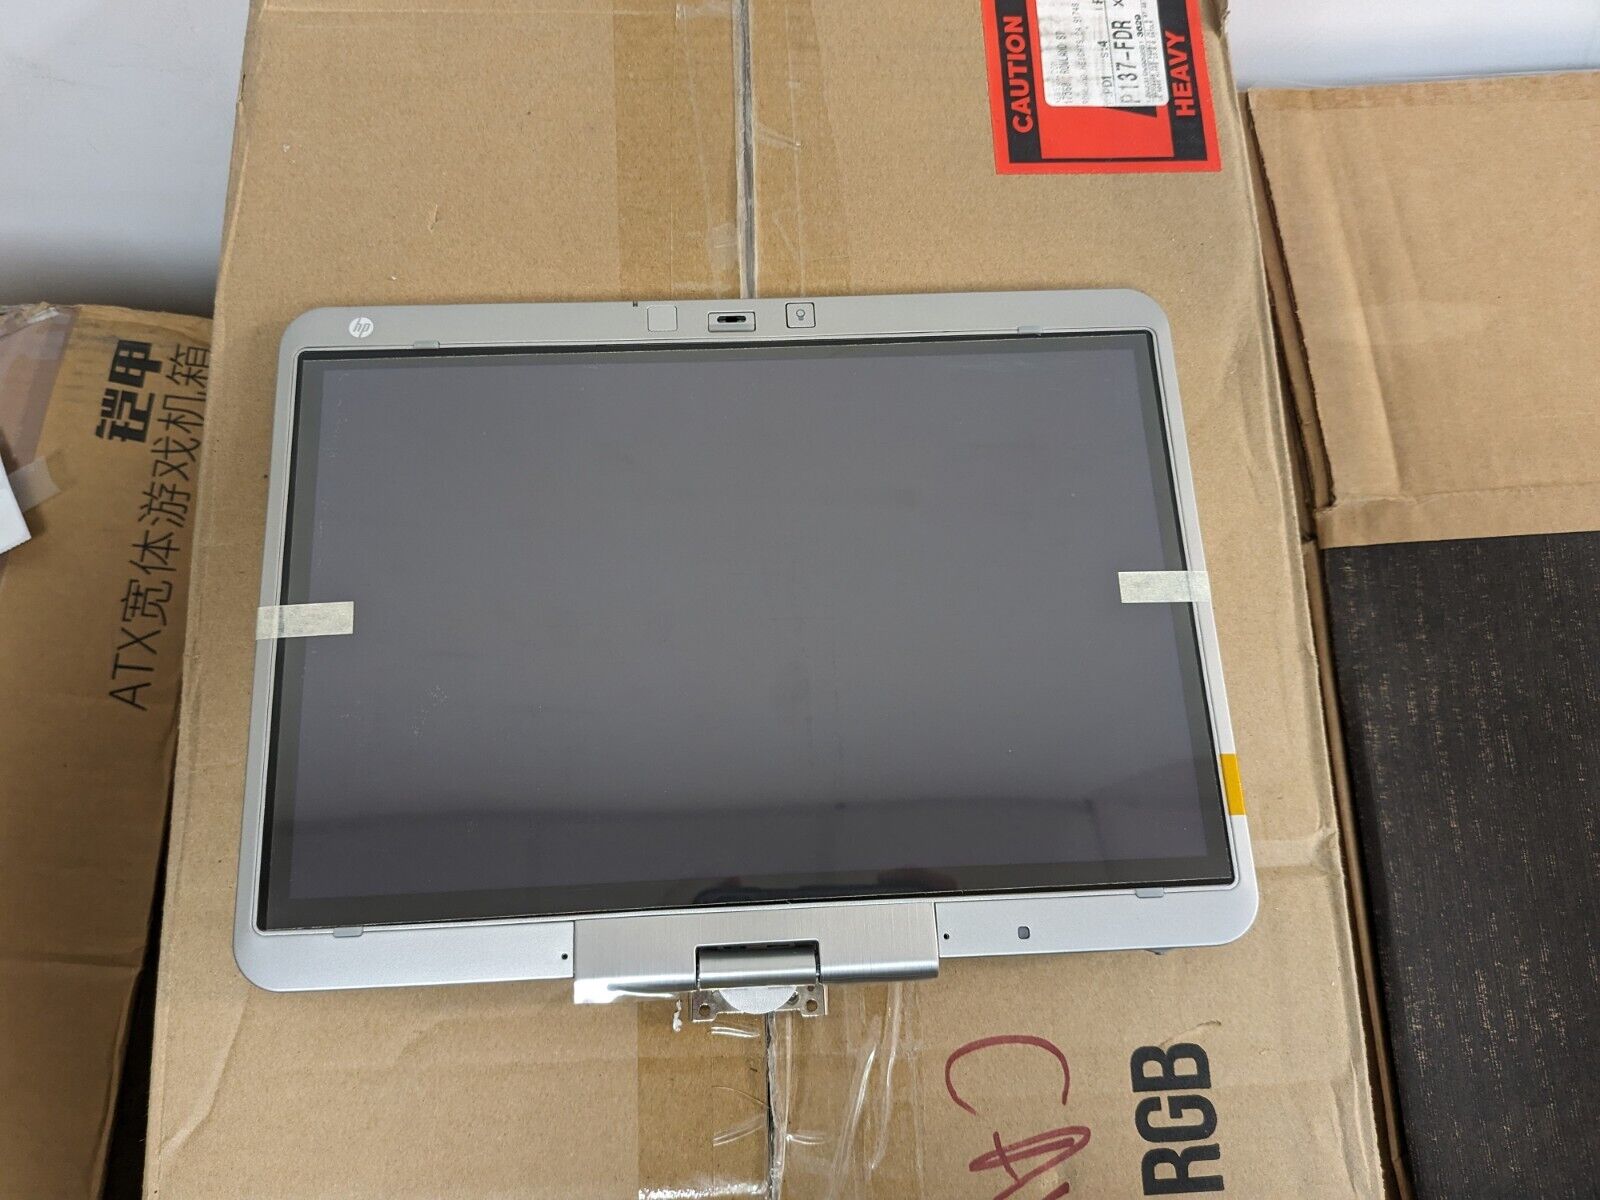  HP Compaq 2740p Complete Top Half LCD Unit WXGA Swivel Silver 597827-001 Touch